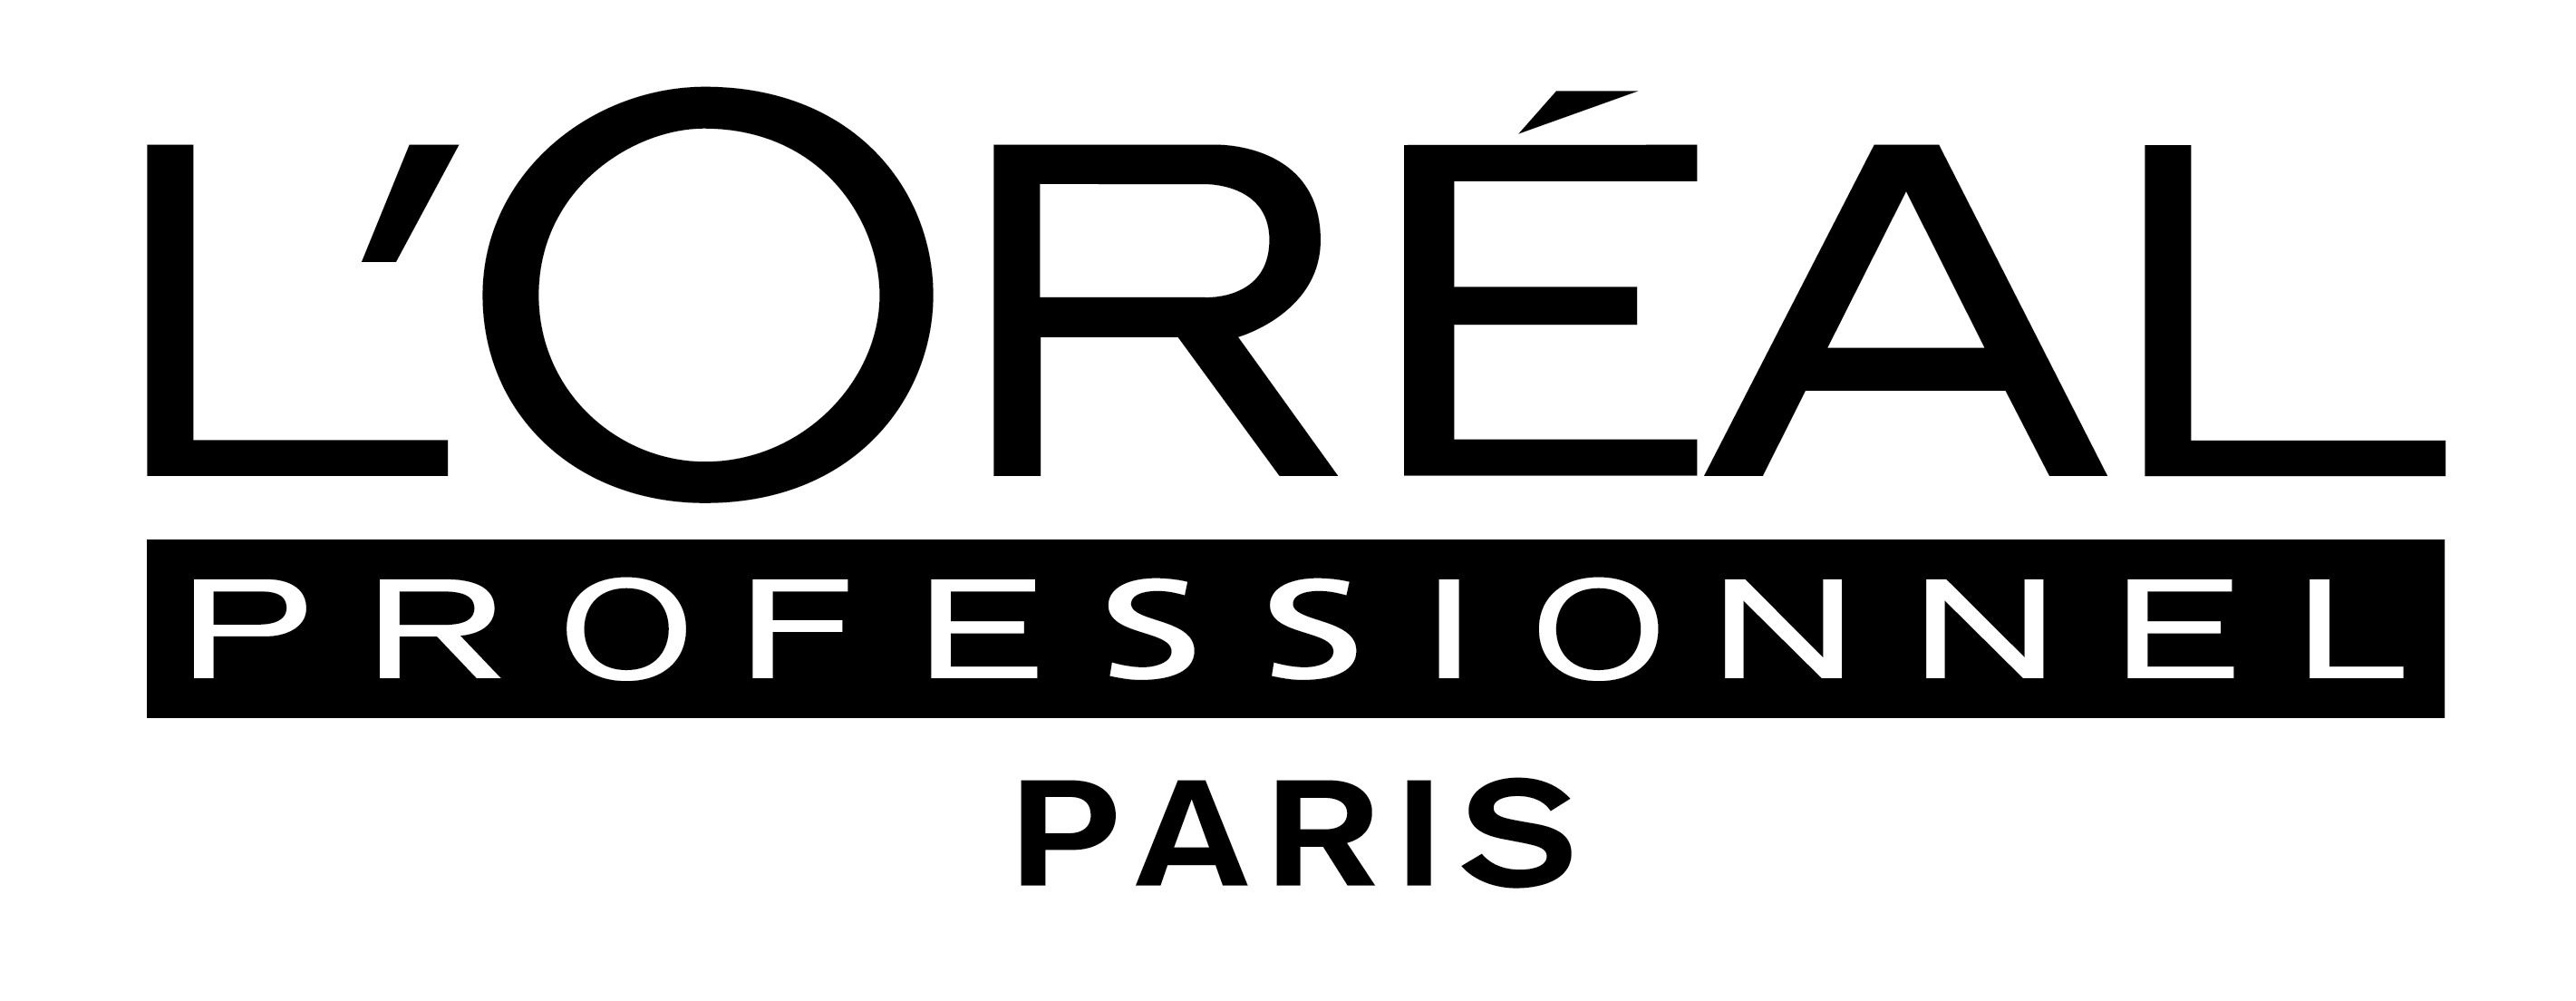 Косметика бренда LOREAL PROFESSIONNEL, логотип